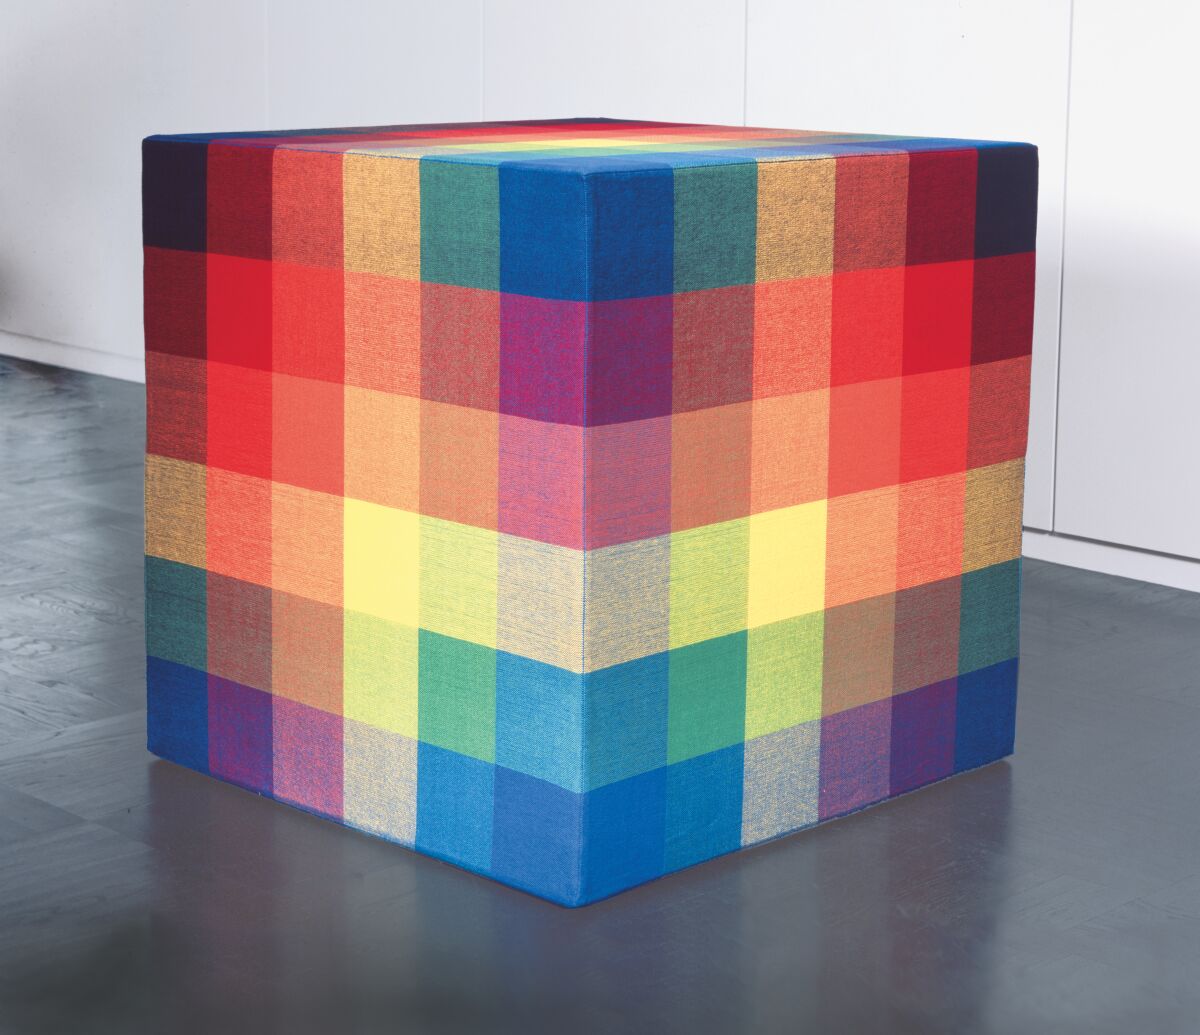 Jim Isermann's "Untitled (Cubeweave)" is a multicolored cube